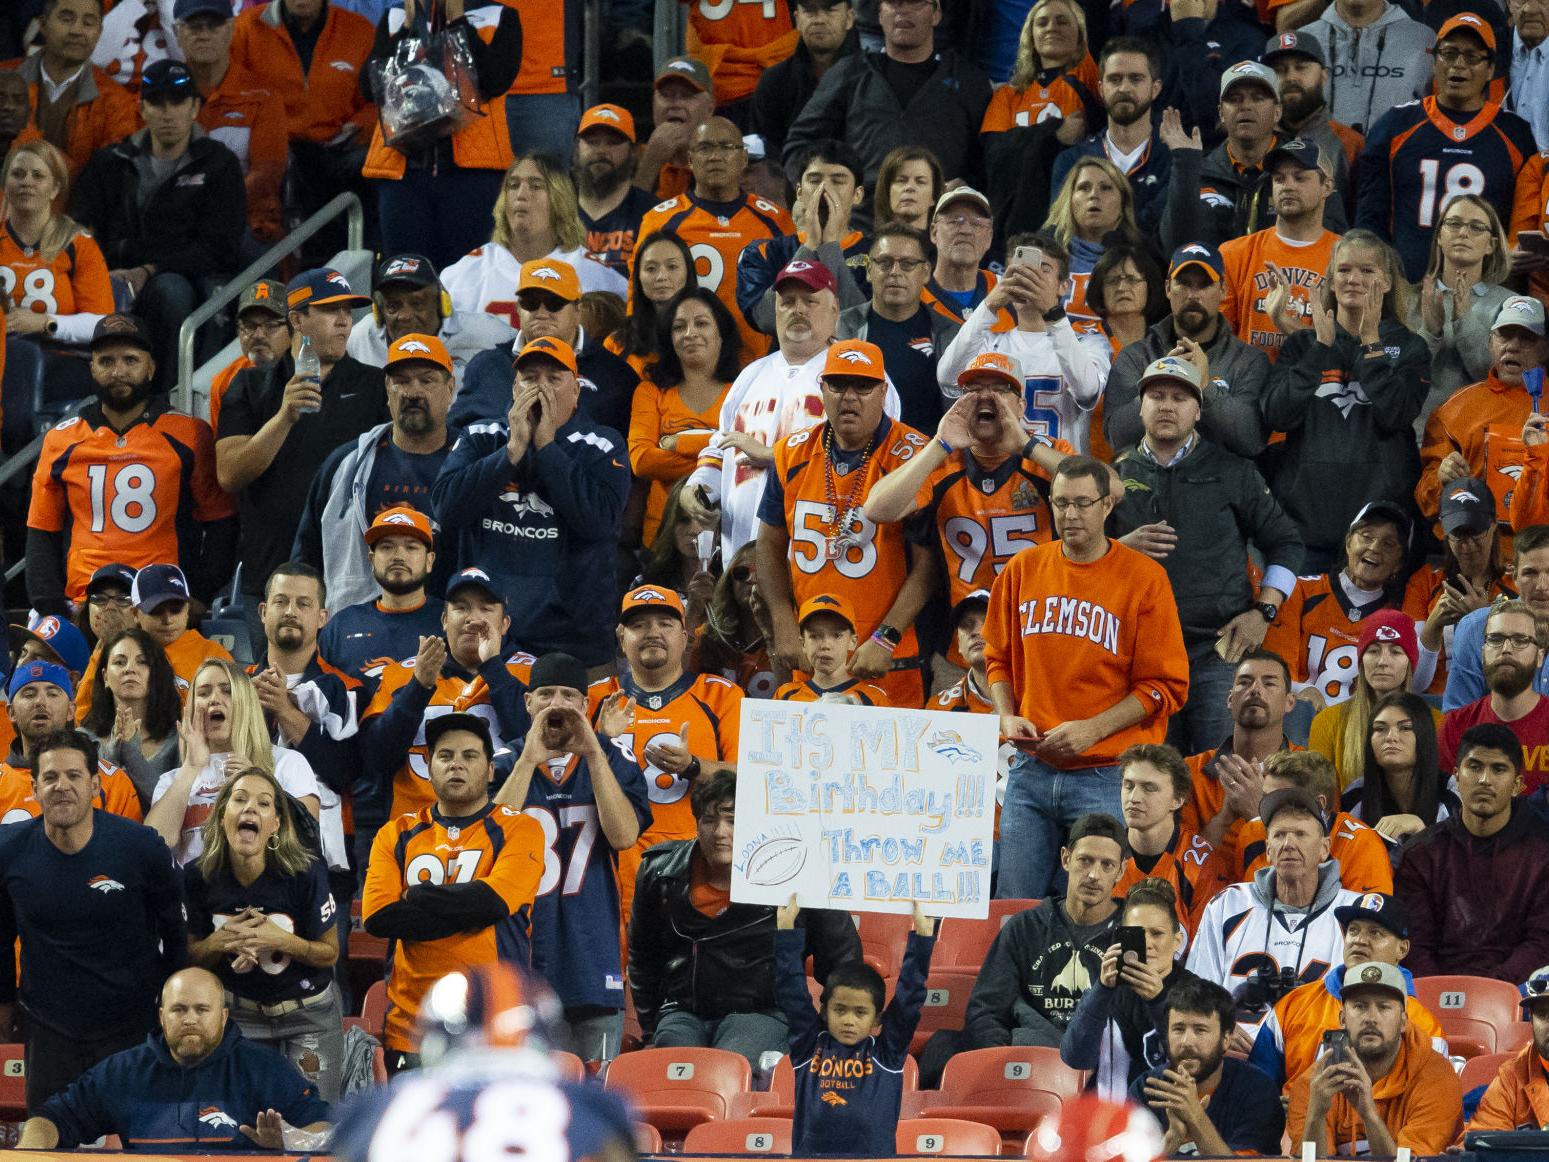 Paul Klee: For Denver Broncos season tickets, the waiting (list